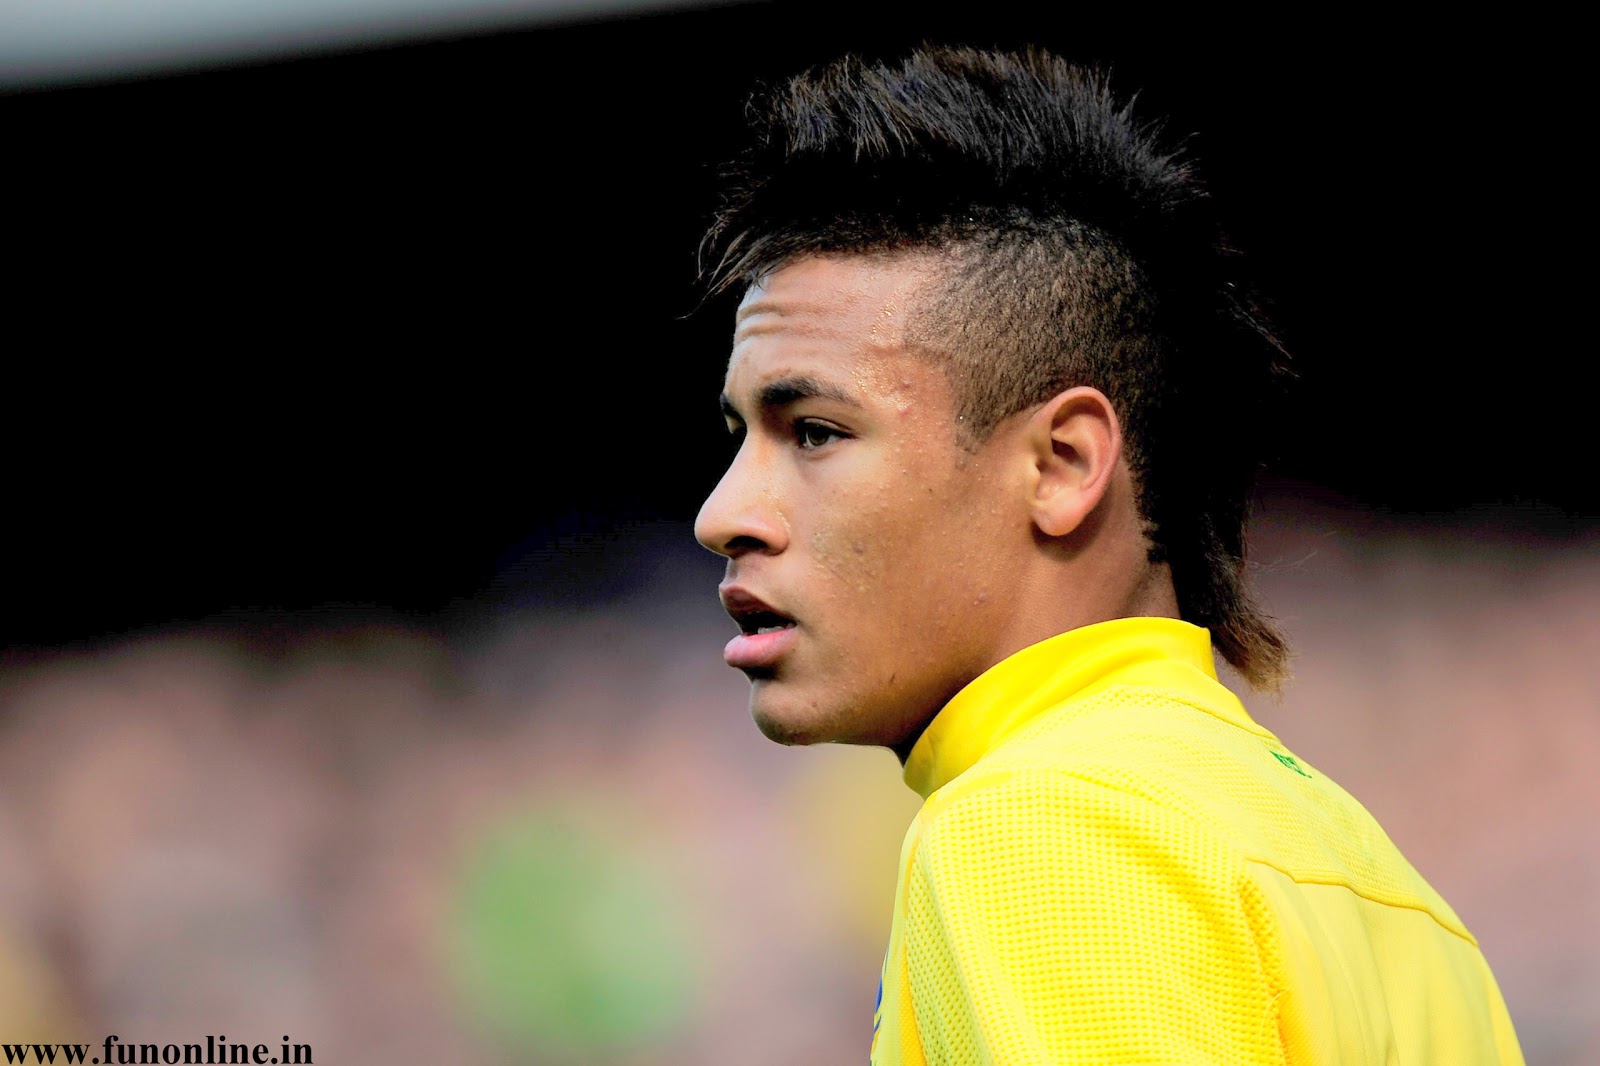 All Wallpapers: Neymar Da Silva Hair Style Wallpapers 2012